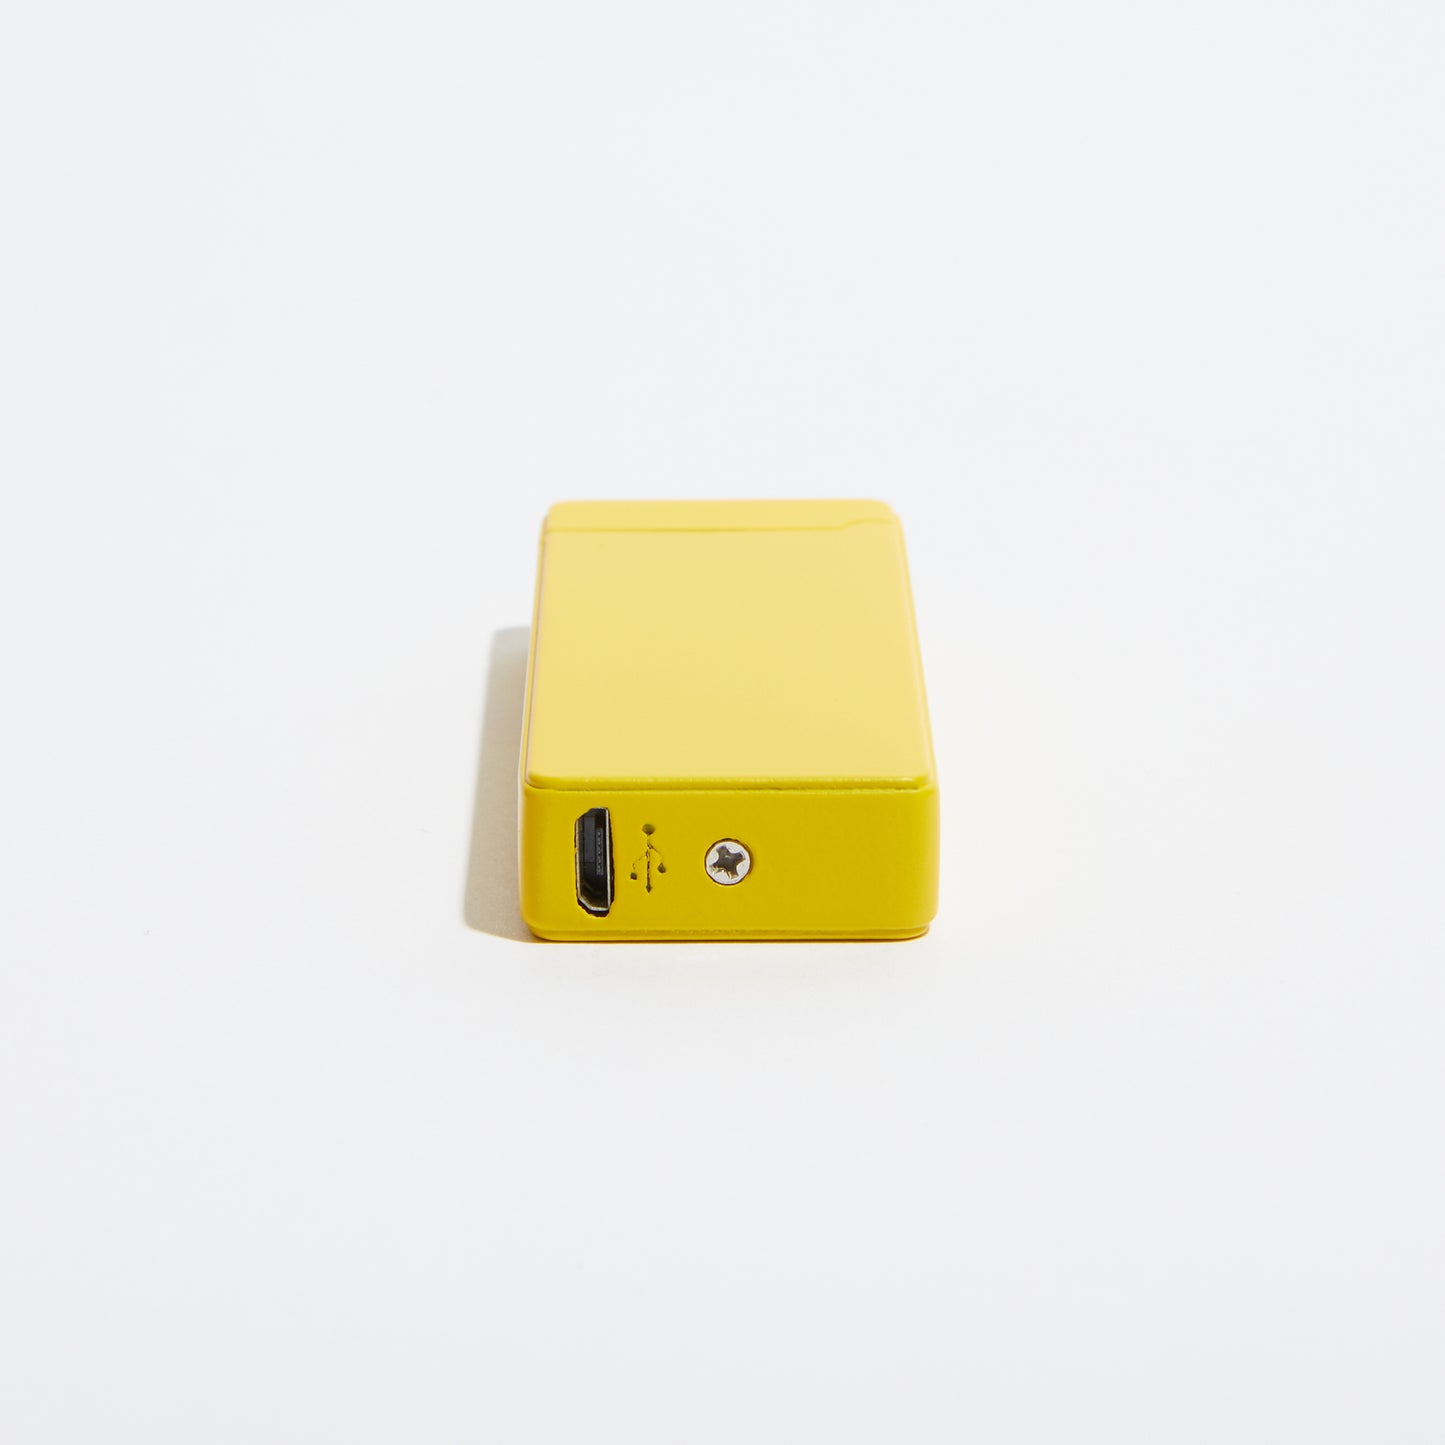 Pocket Electric Arc Lighter - Yellow